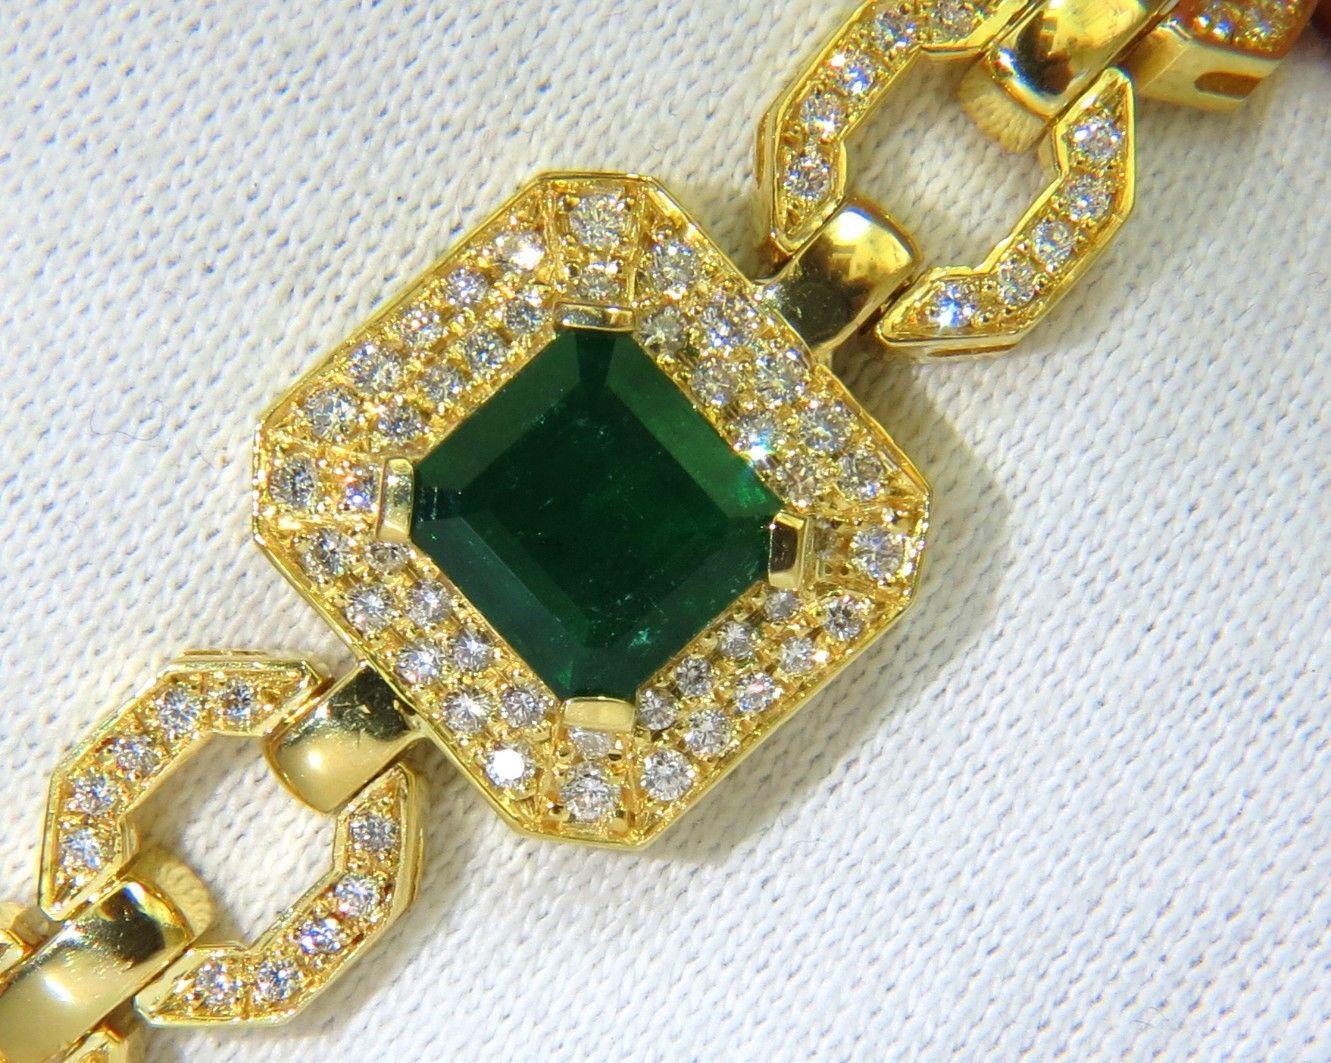 3.50ct. Natural Emerald Diamond bracelet.

Square, emerald cut emerald.

9.0 X 9.1mm

Vivid Green color

Clean clarity

Transparent

Excellent Saturation.



Diamonds:

2.75ct. G-color, Vs-2 clarity



18kt. Yellow gold. 

31.5 grams

6.75 inches